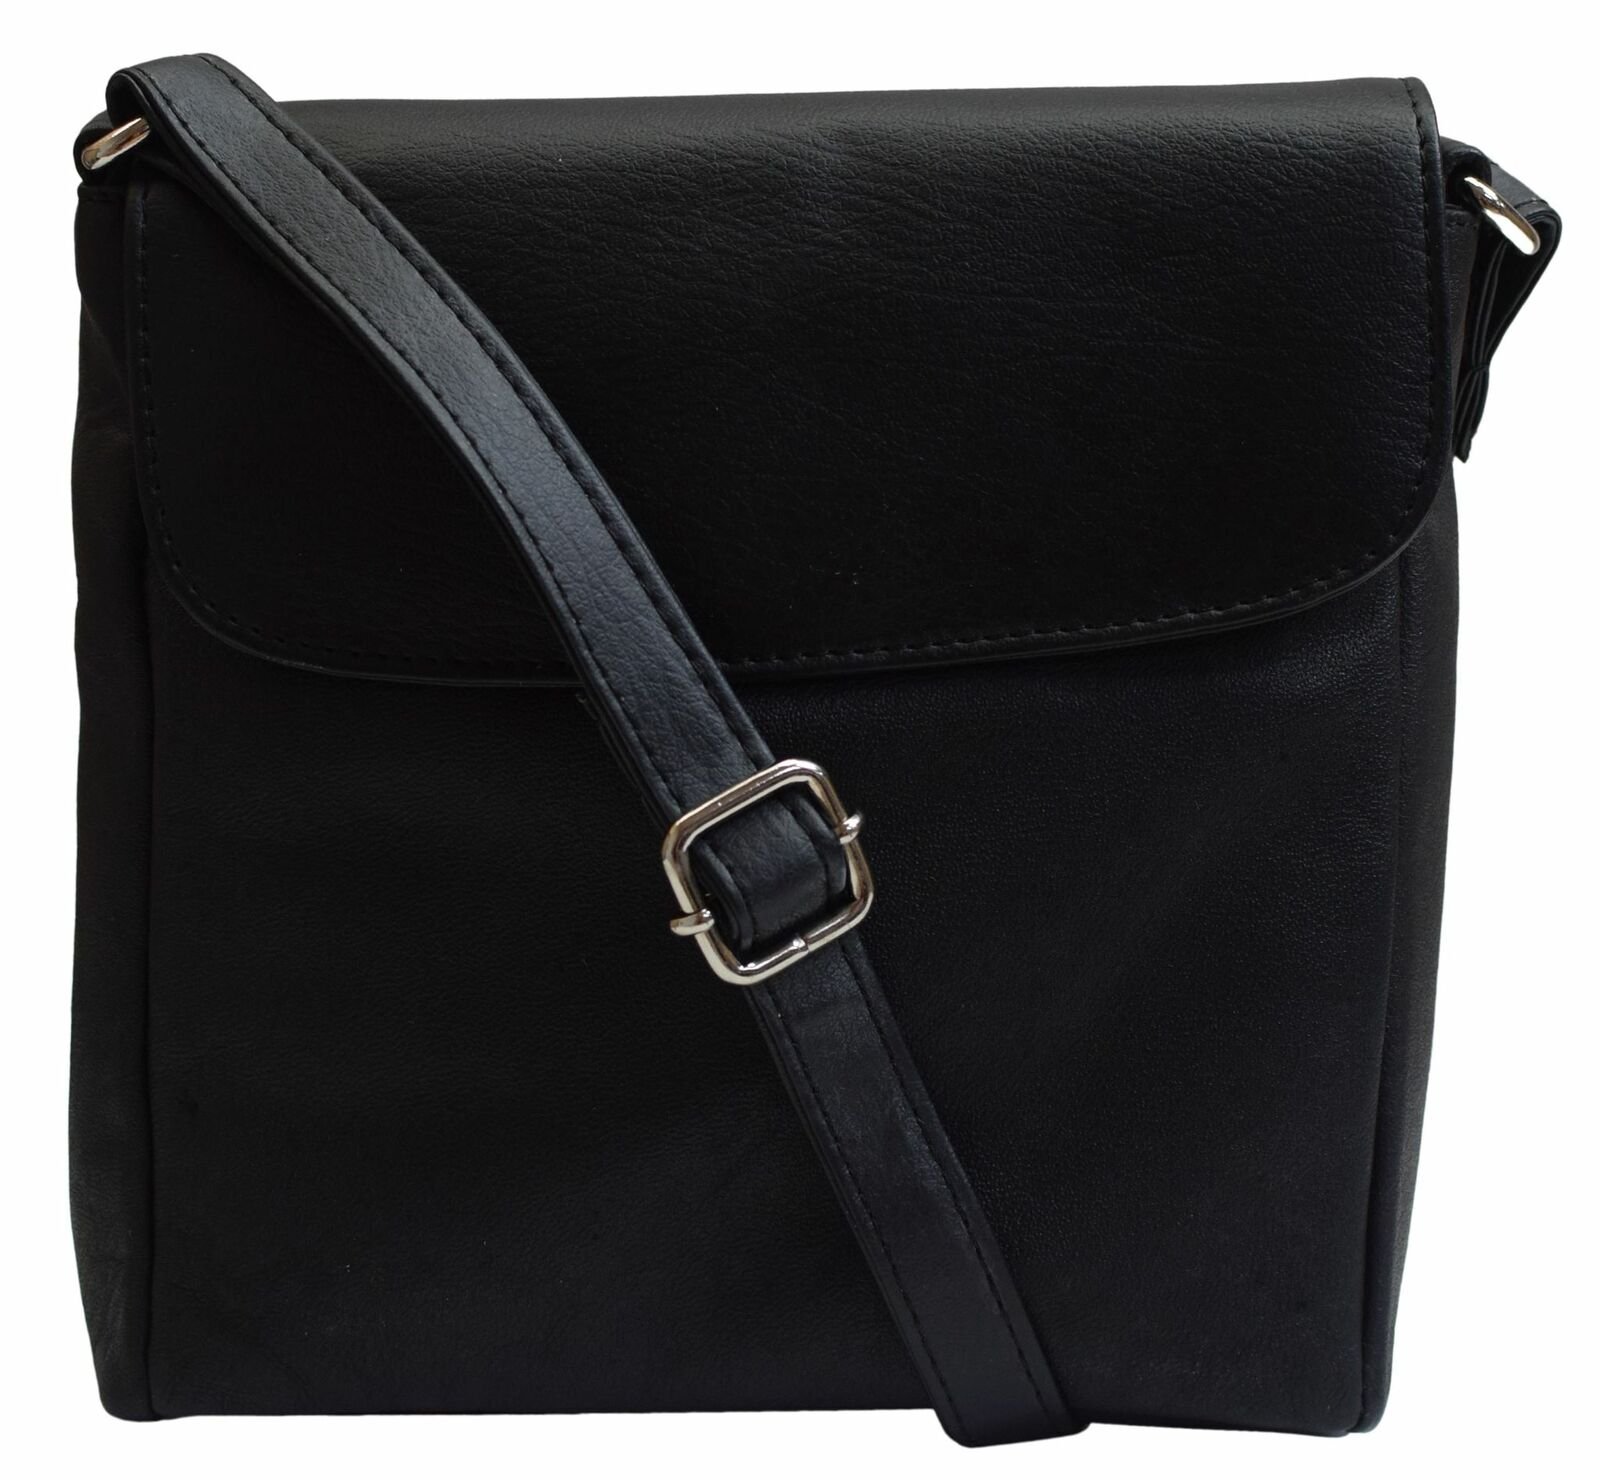 Marshal Crossbody Bag Leather Black Women's Purse Handbag Ladies Shoulder Bag